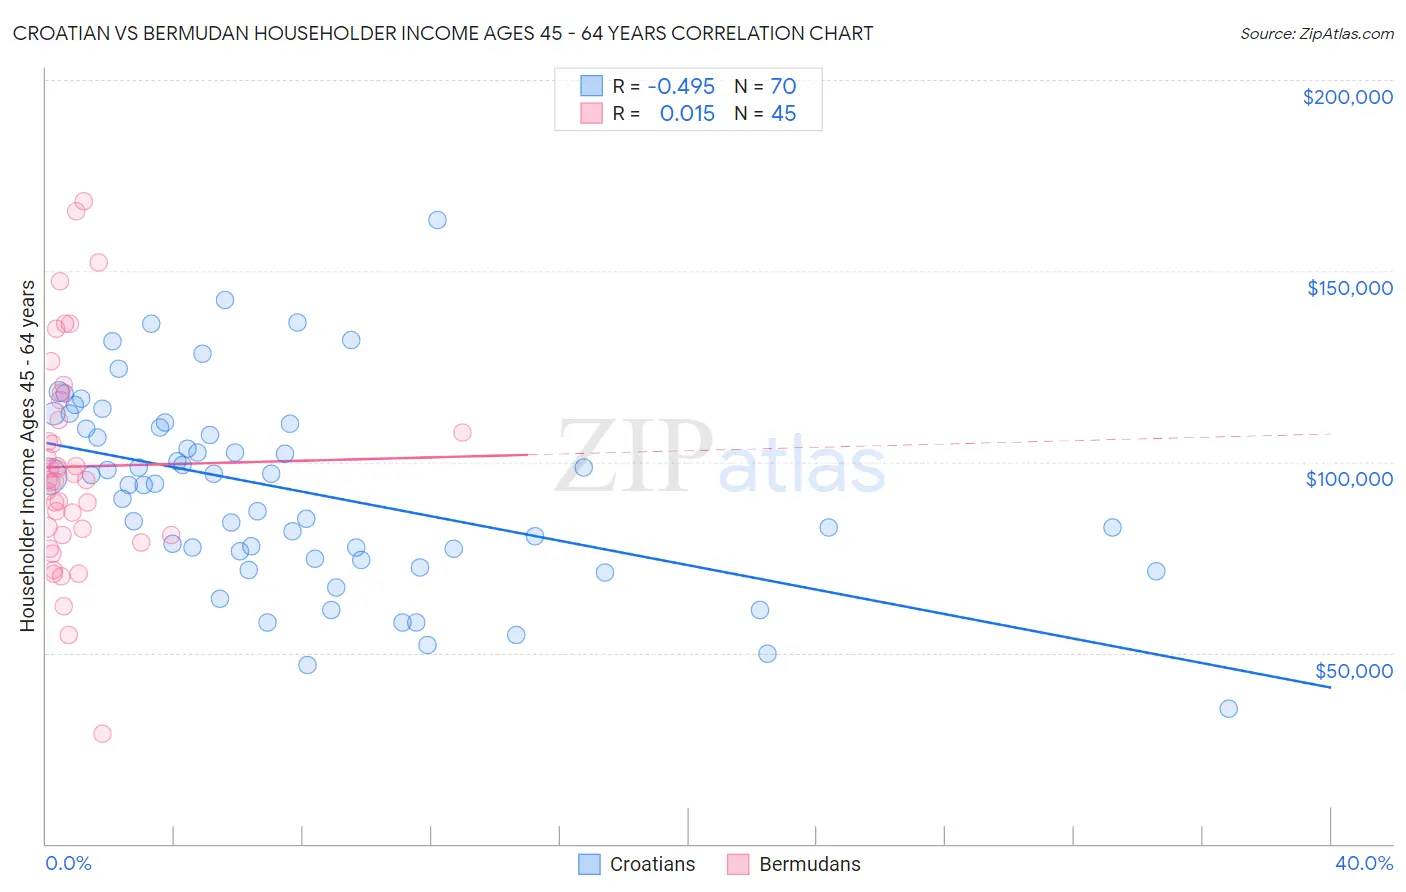 Croatian vs Bermudan Householder Income Ages 45 - 64 years